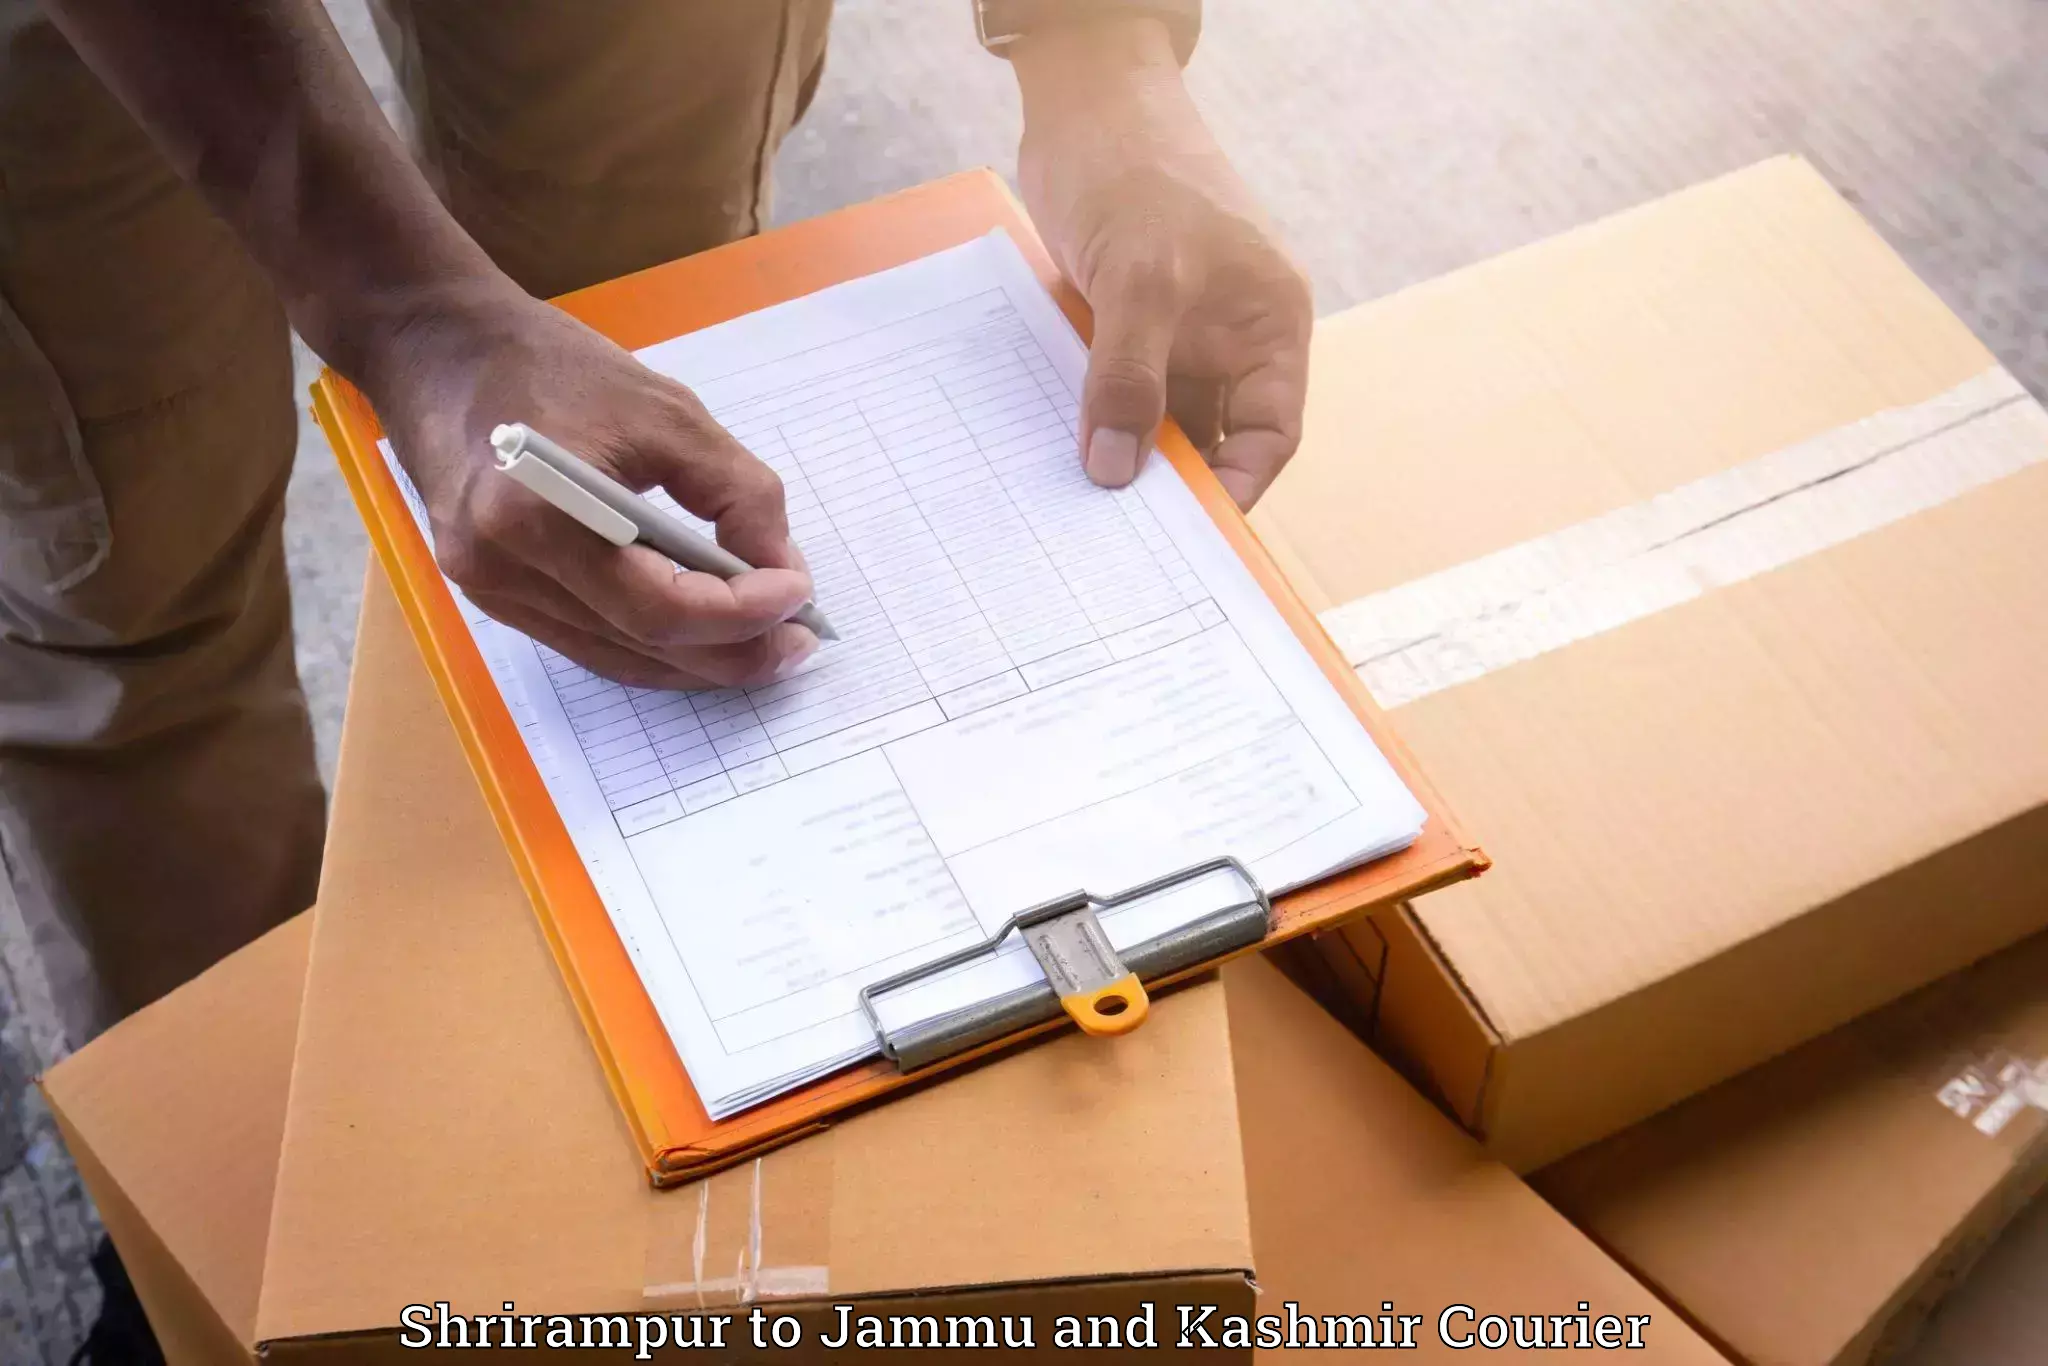 Furniture relocation experts Shrirampur to Katra